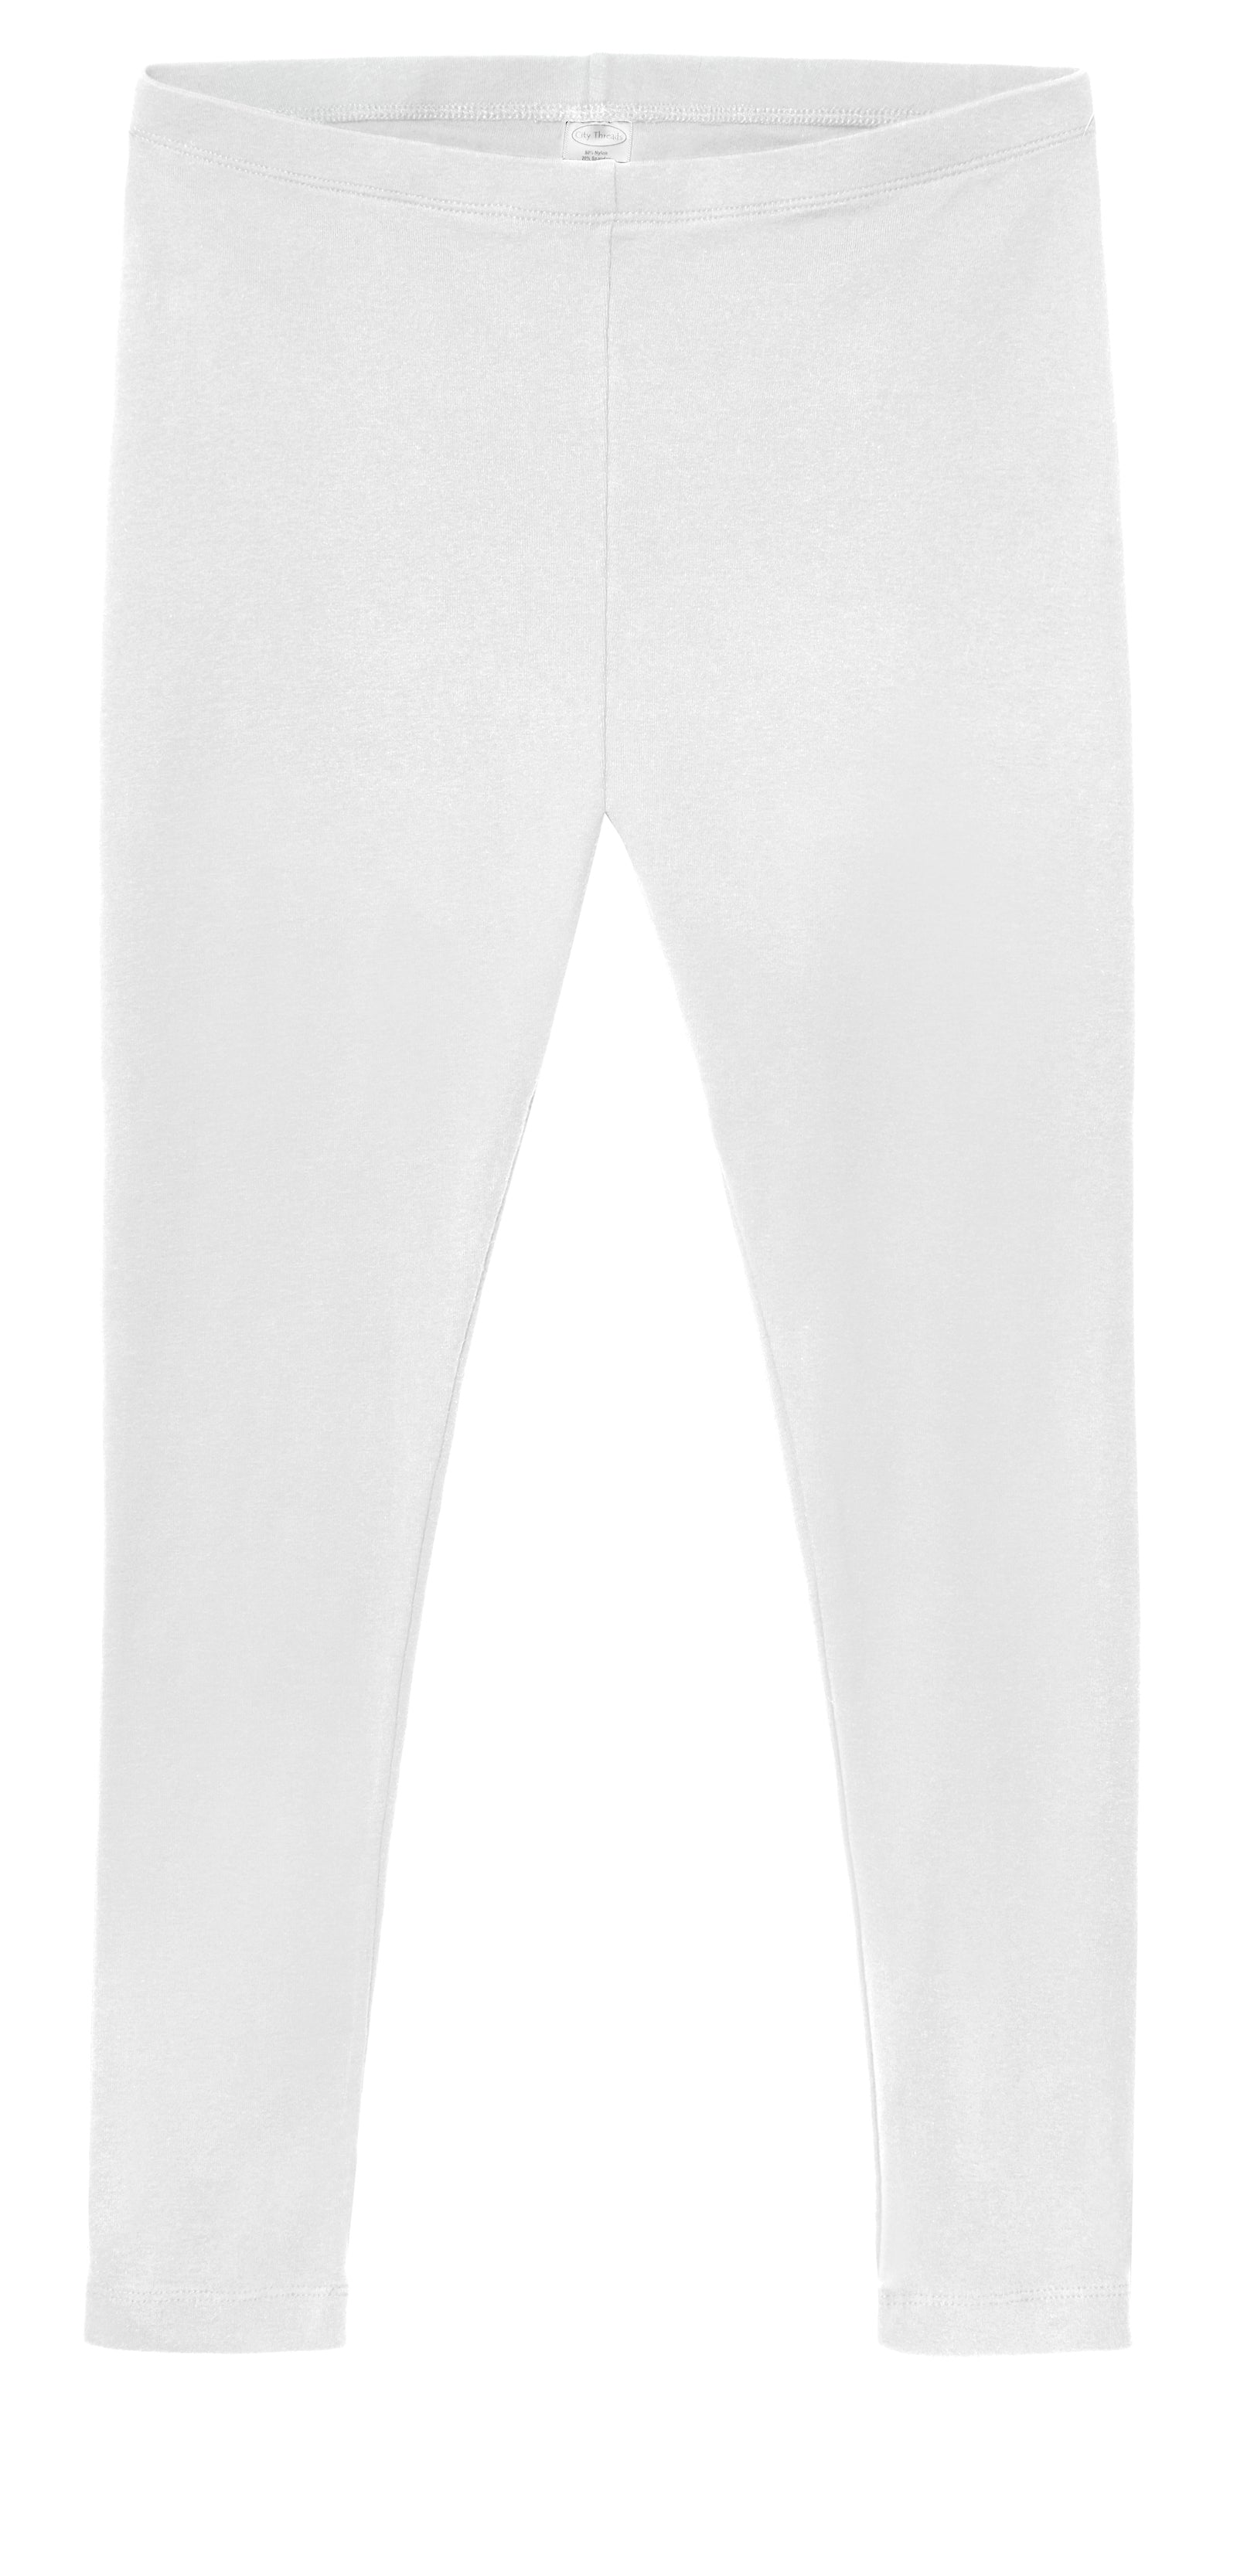 Women's Soft 100% Cotton Petite Leggings | White